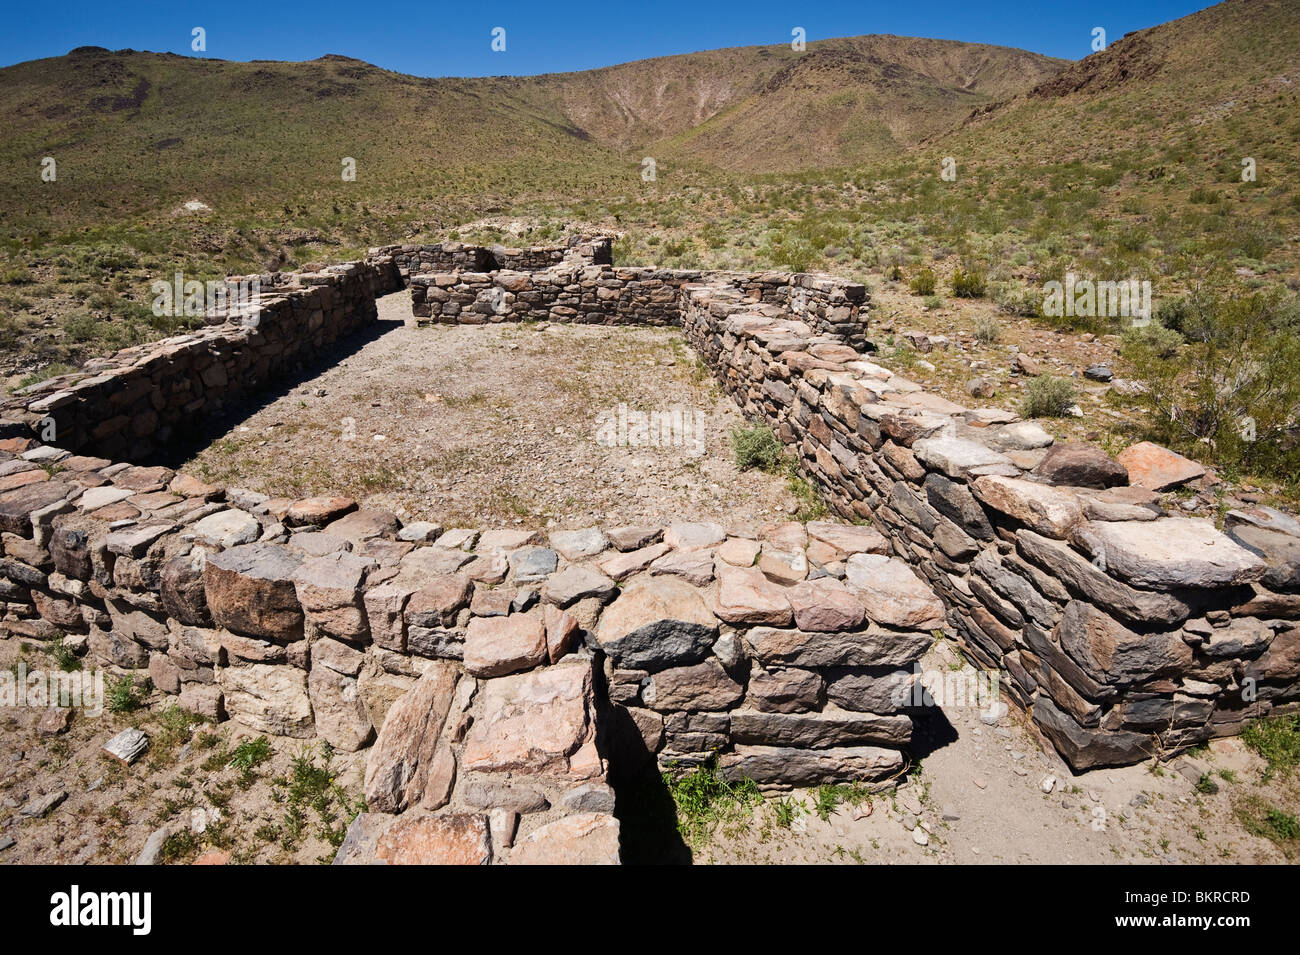 Stone ruins of Fort Piute, built in 1867, Mojave desert, California Stock Photo